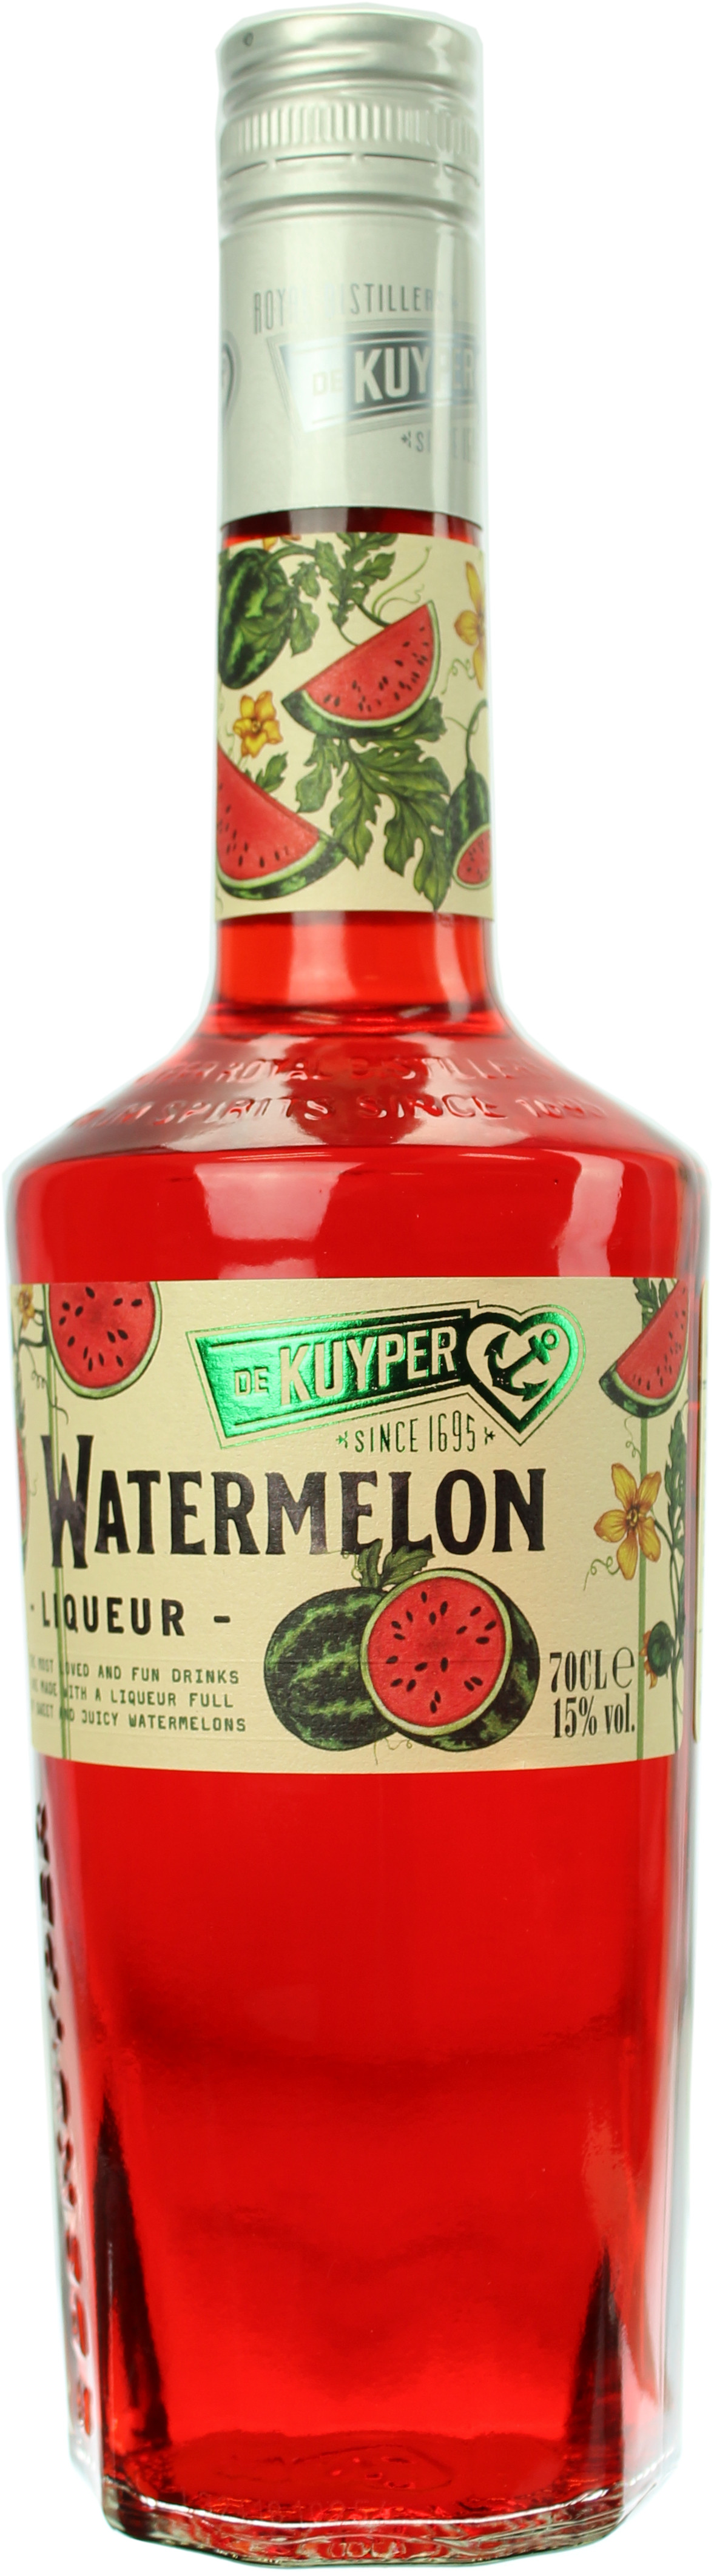 De Kuyper Watermelon Liqueur 15.0% 0,7l